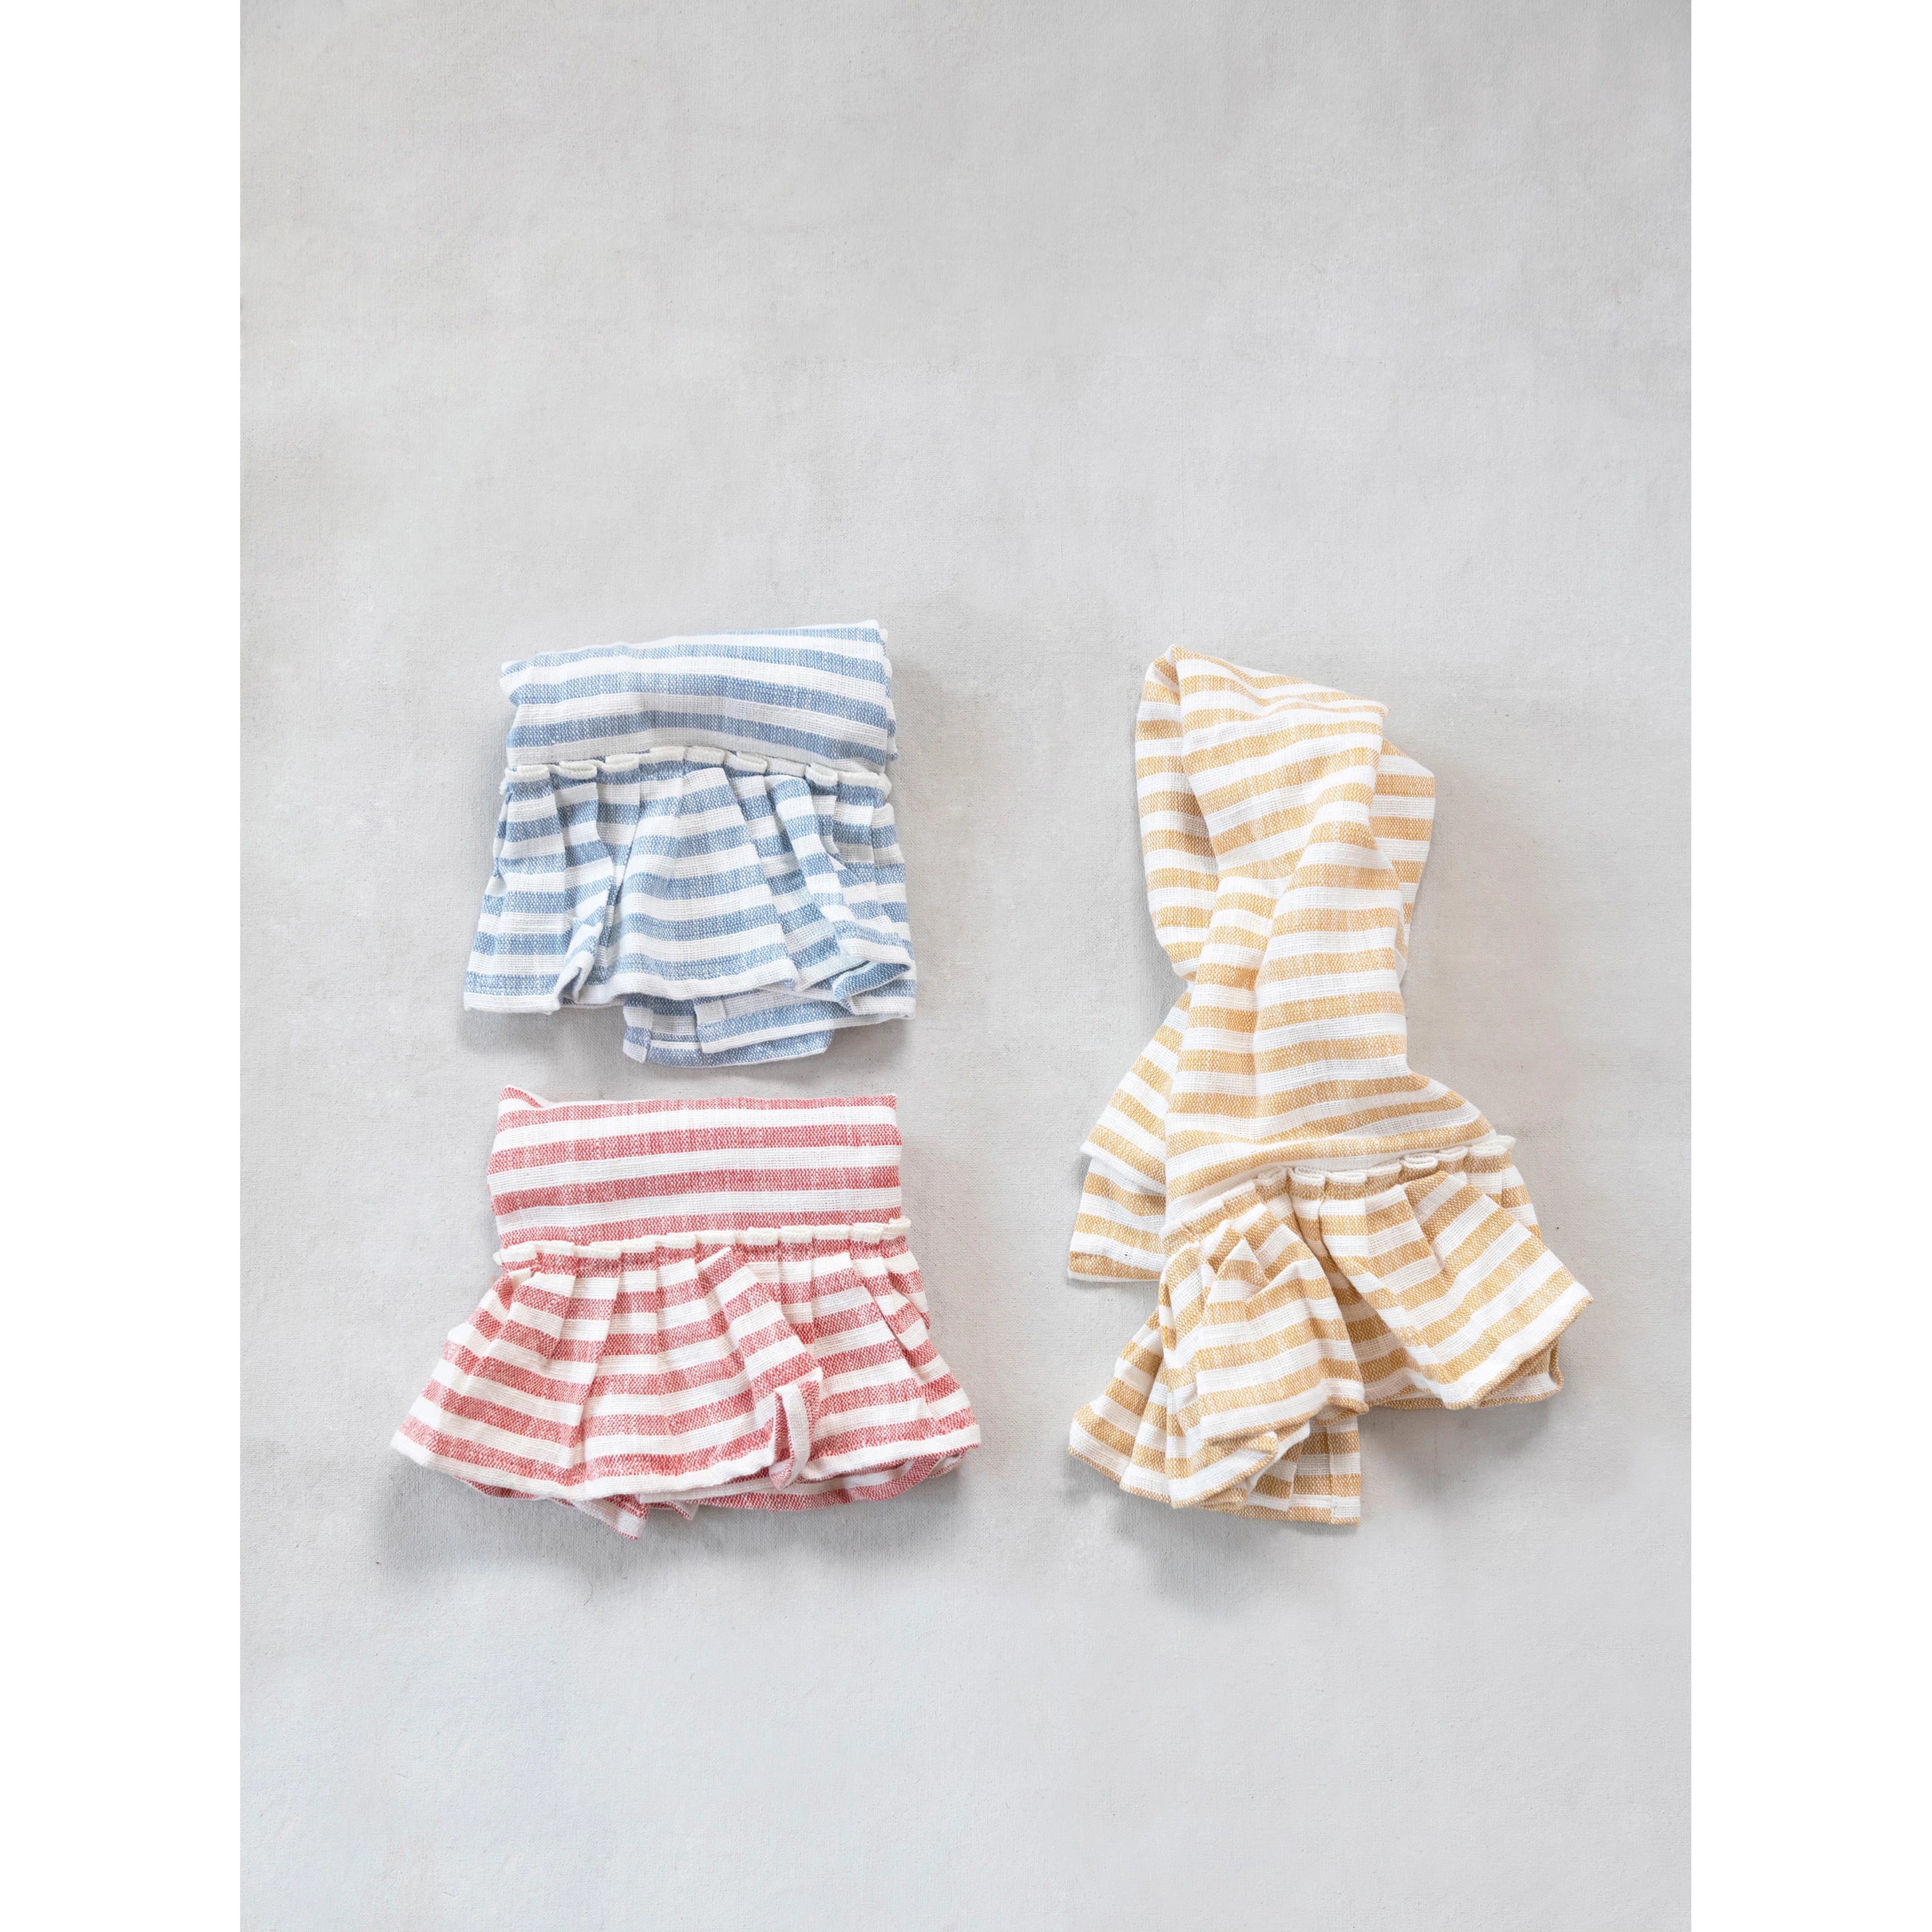 Creative Co-Op Tan & Grey Striped Cotton Tea Towels (Set of 3 Pieces)